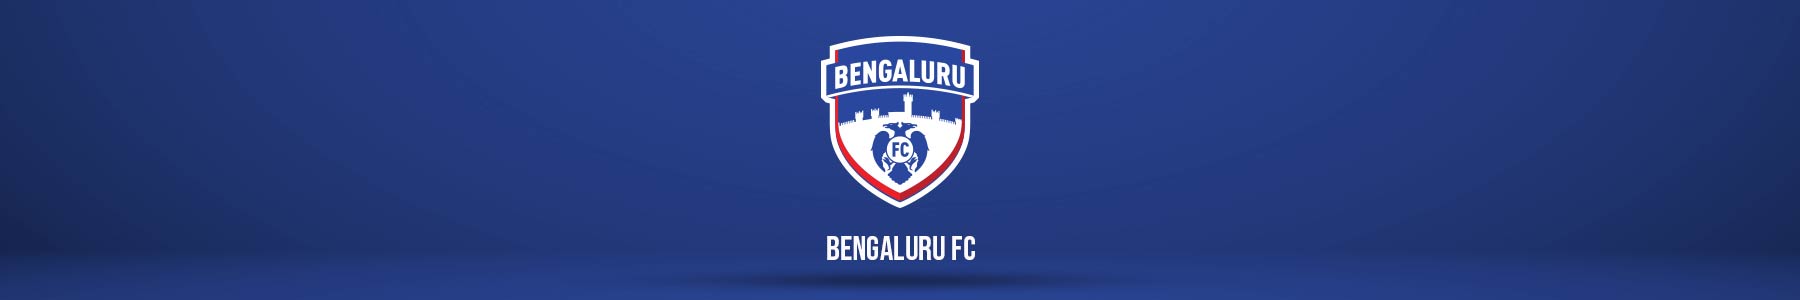 Bengaluru FC Banner